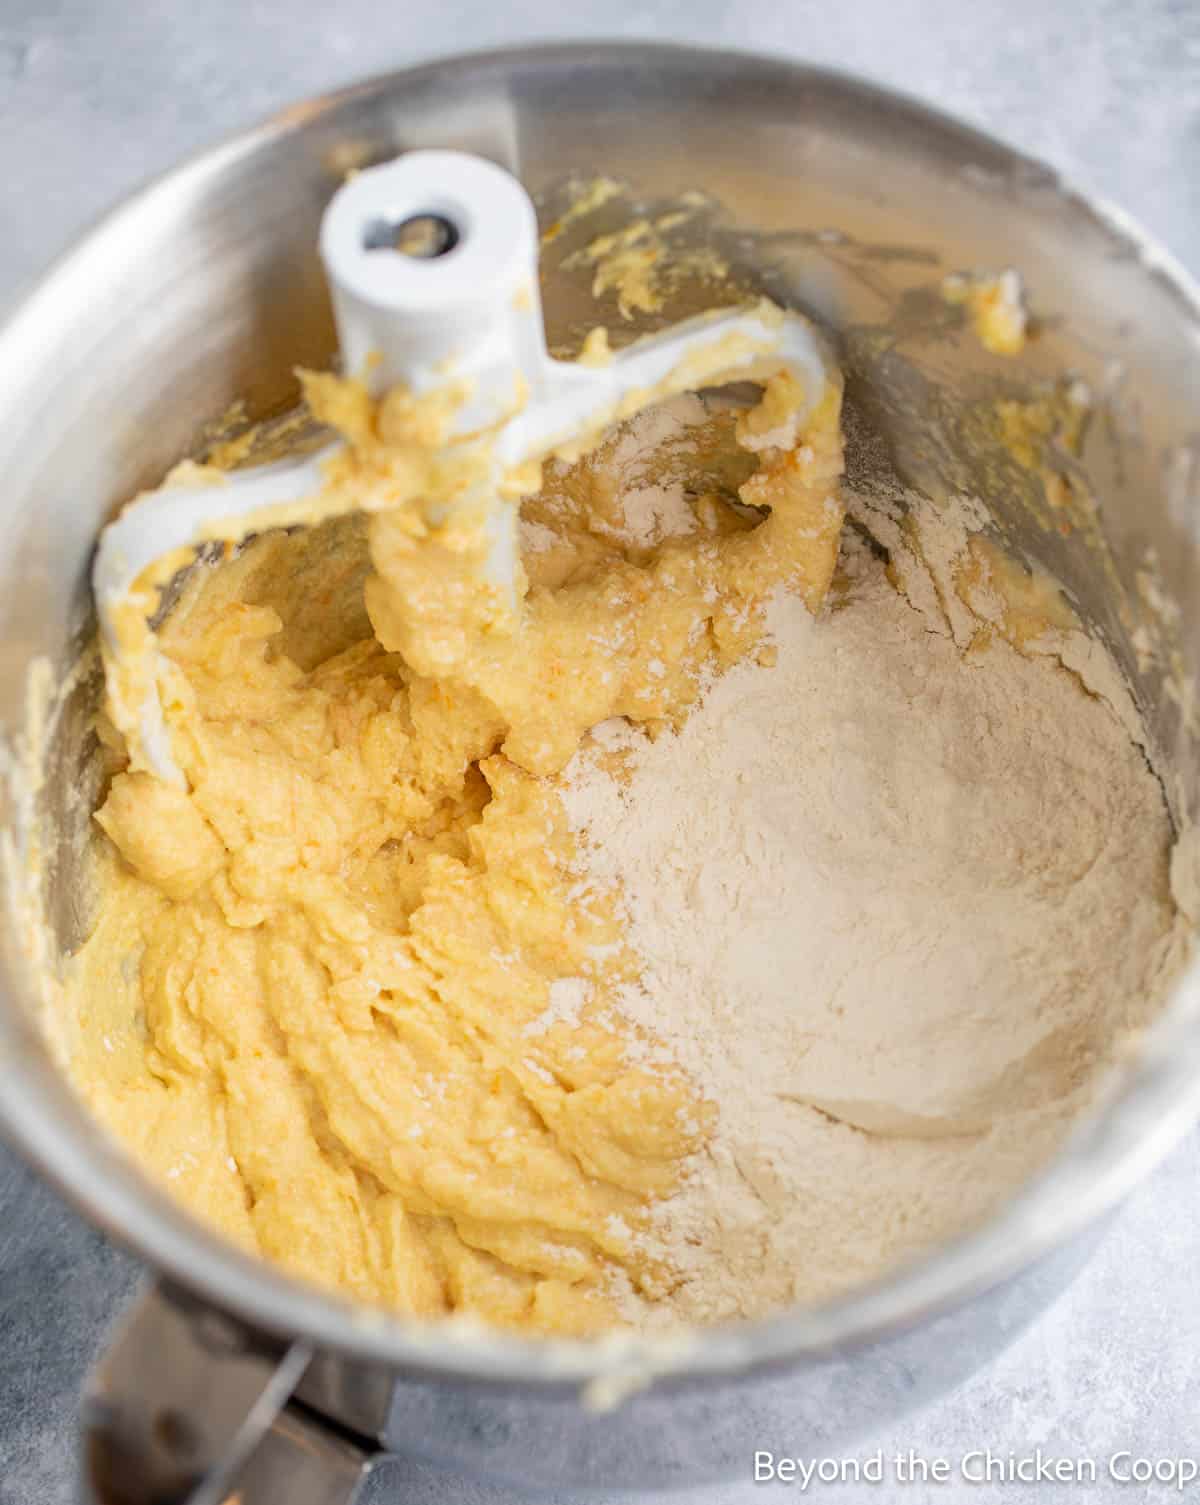 Adding flour to cake batter.